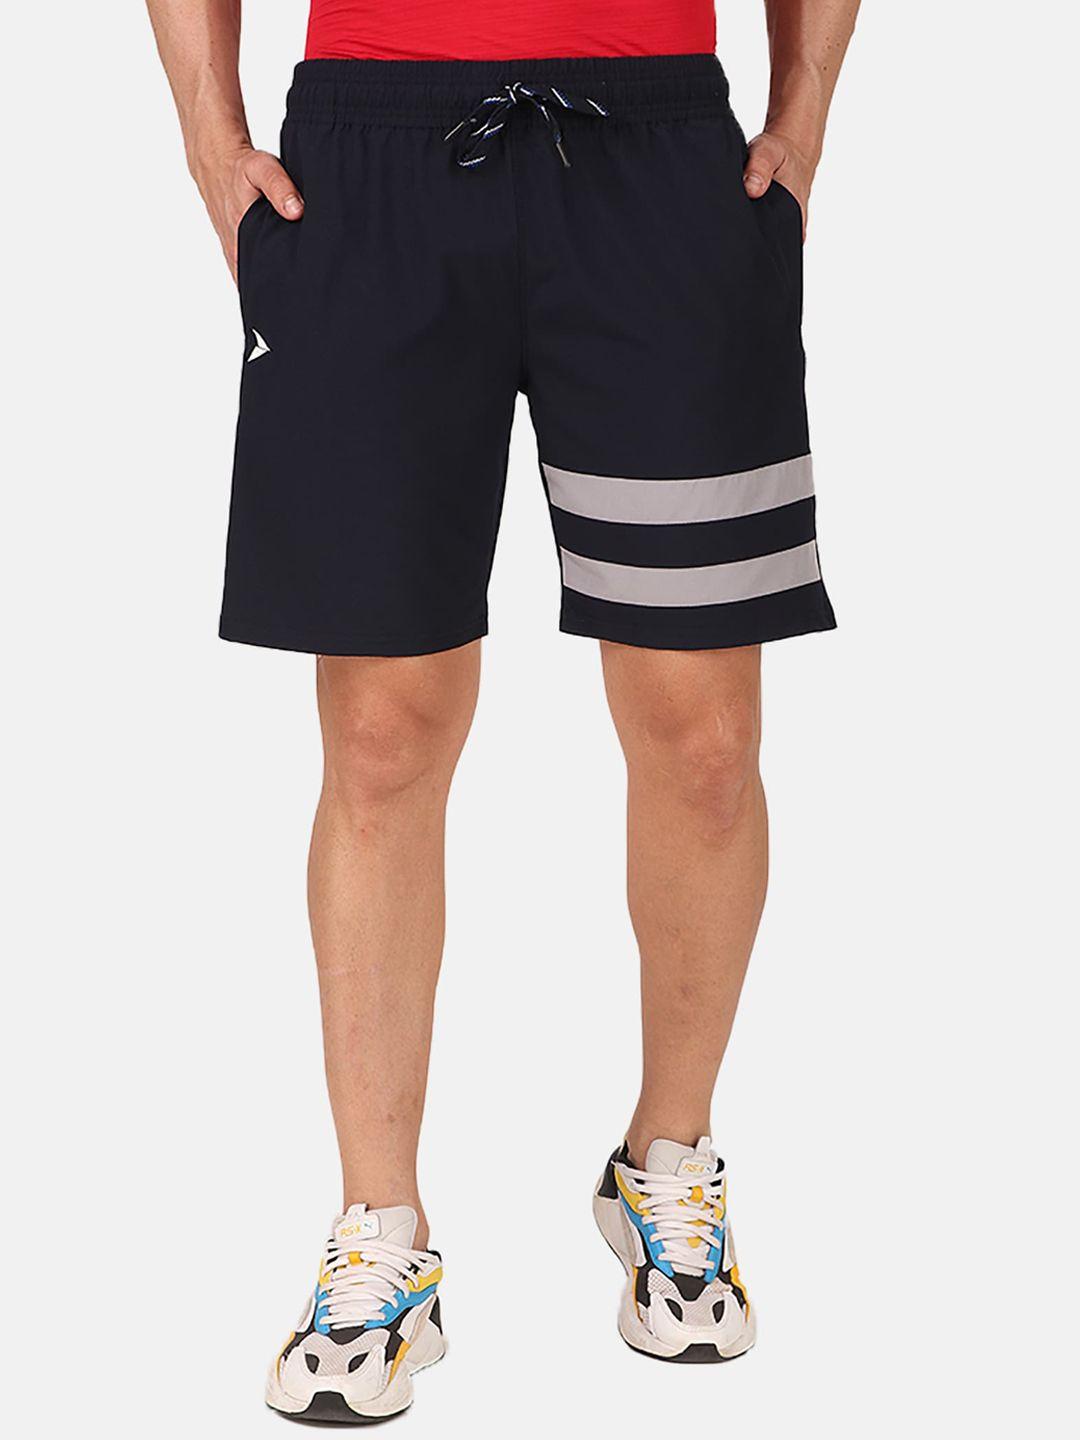 fitinc men navy blue striped running sports shorts